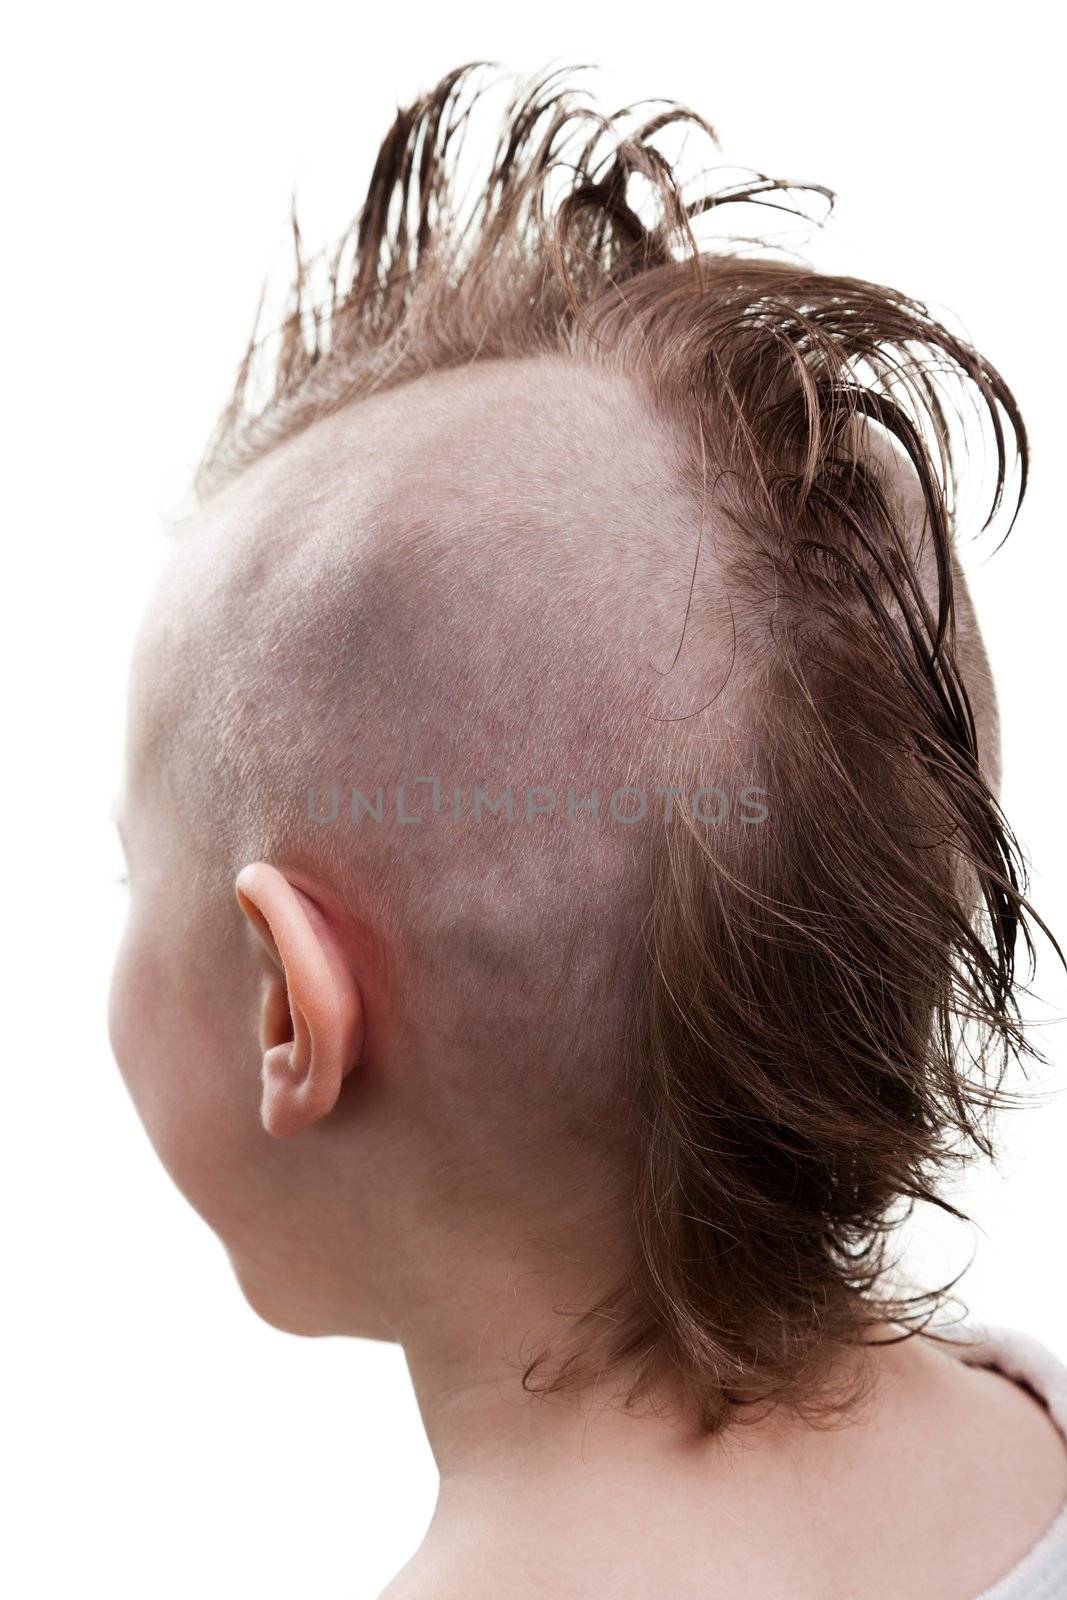 Little cheerful bald punk hair child boy rear view